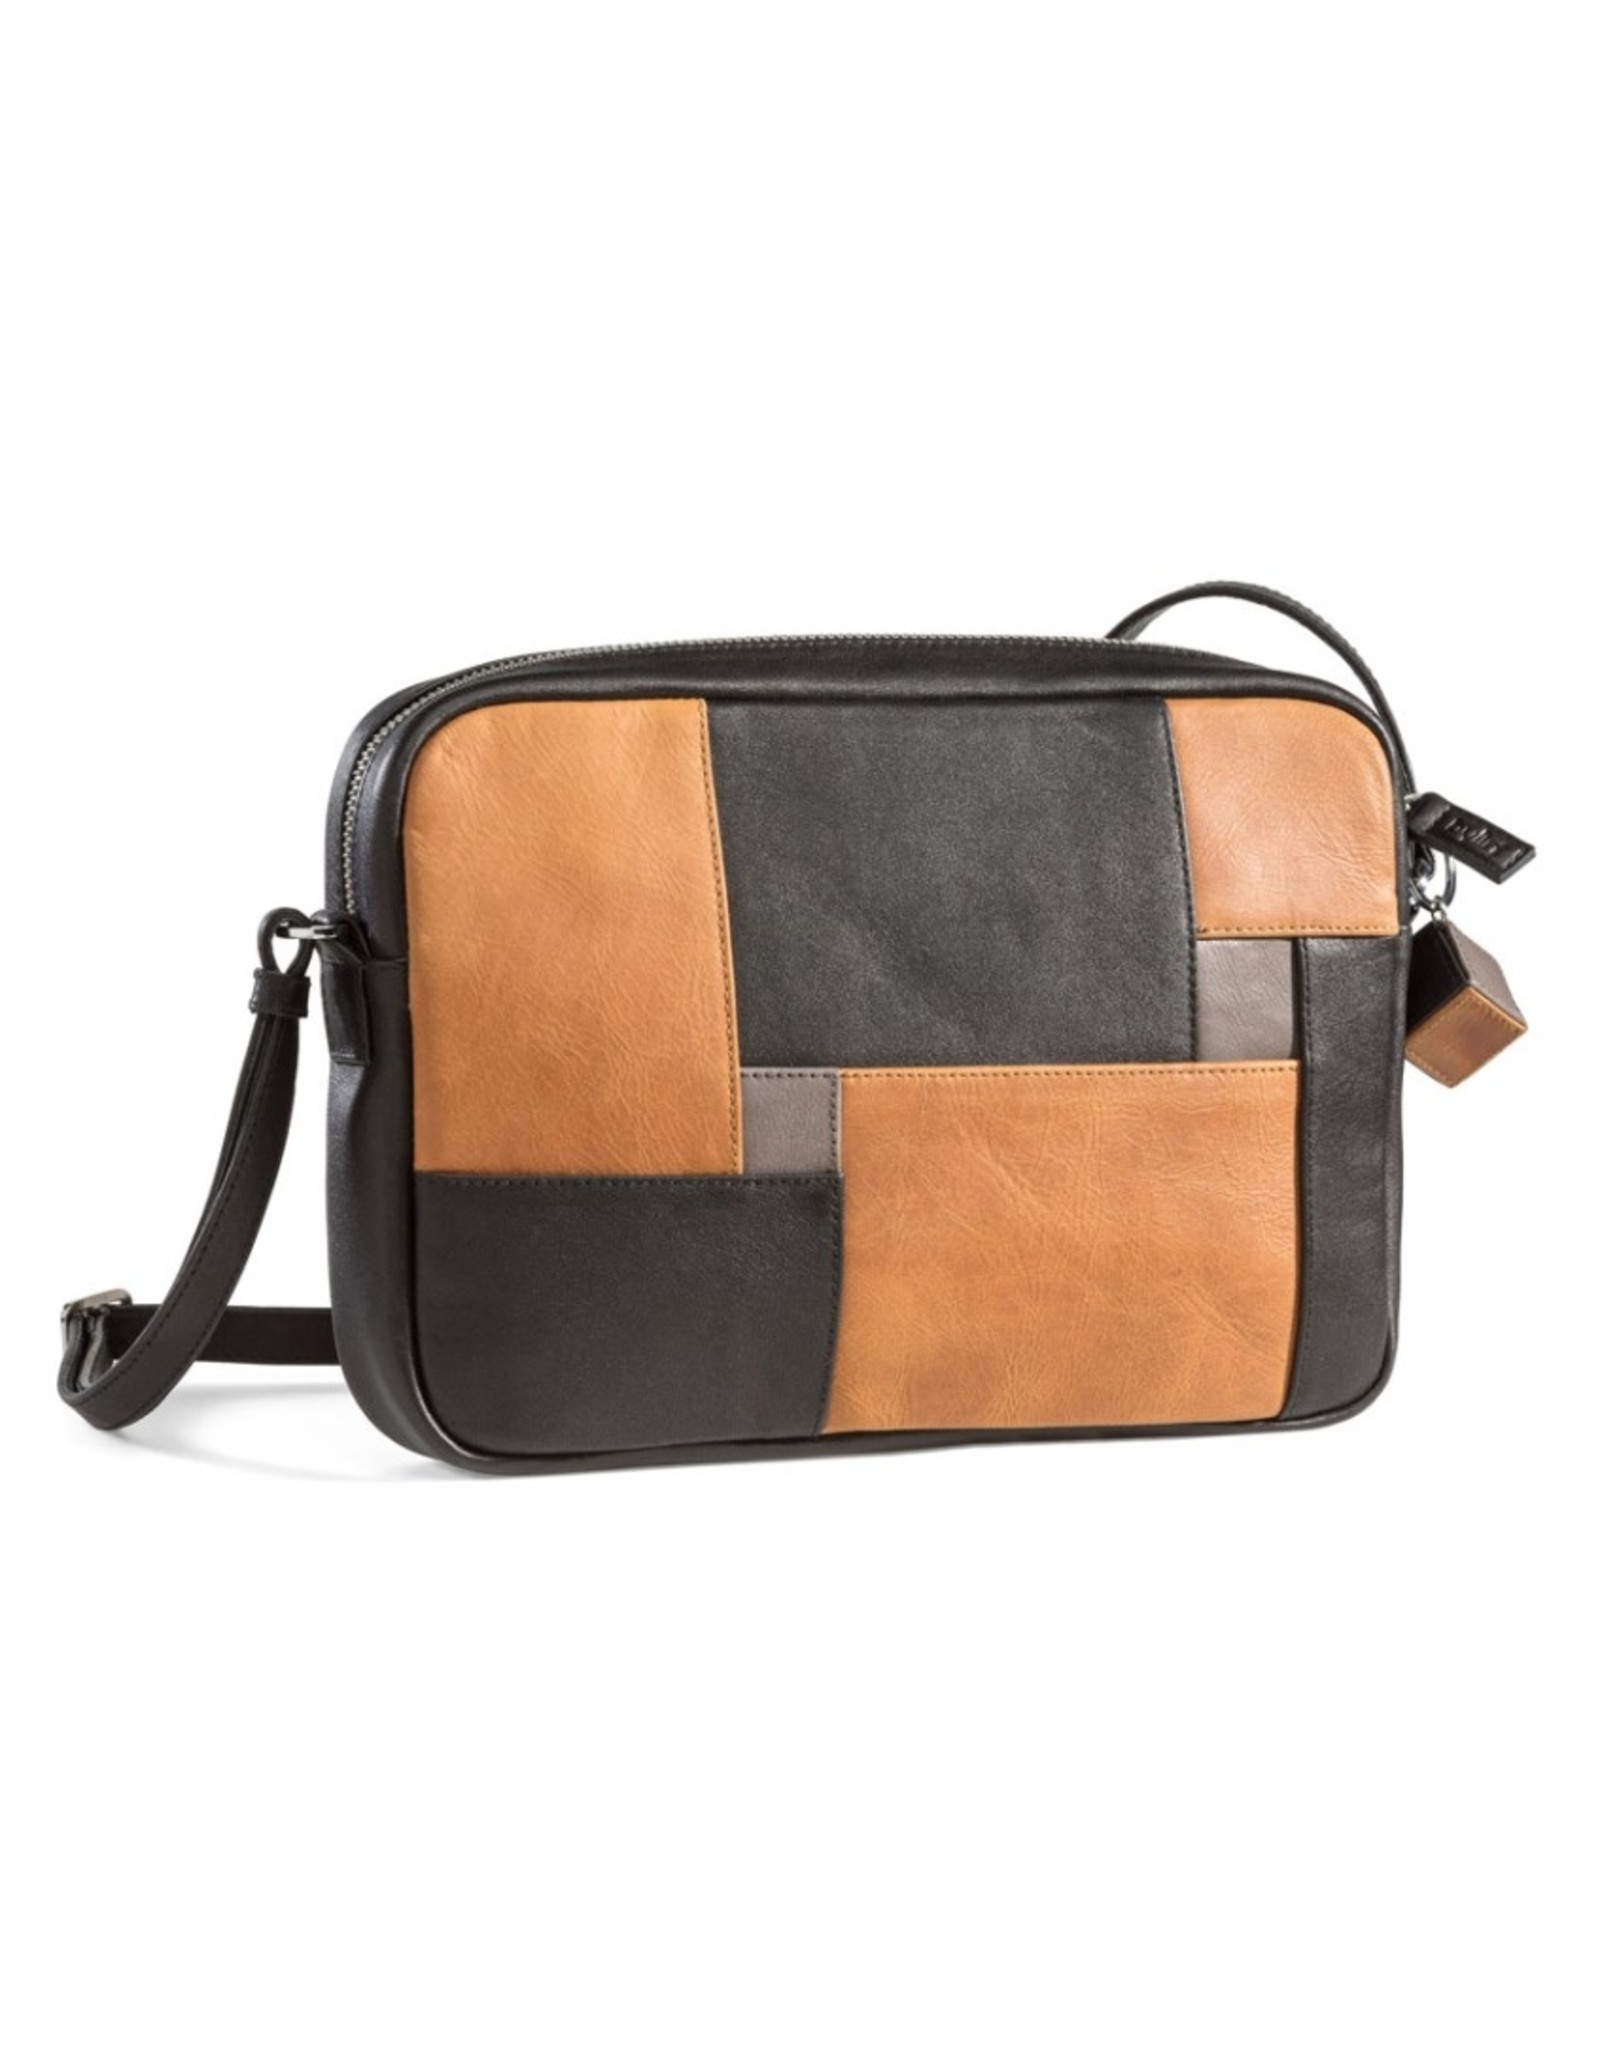 by-Lin Dutch Design Design bags and accessories - by-Lin Cubic handbag cognac-black-grey -vintage leather